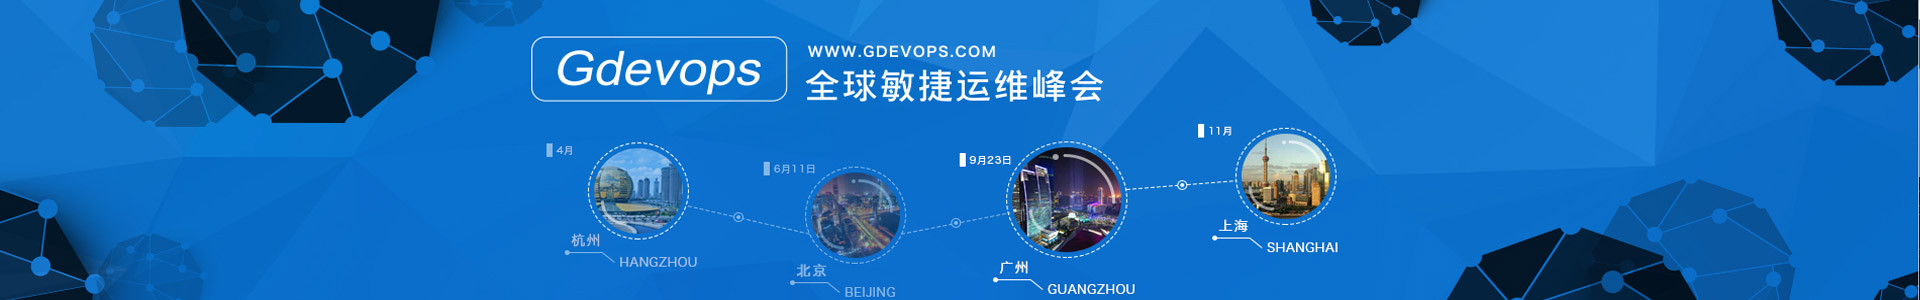 Gdevops 2018全球敏捷运维峰会-广州站